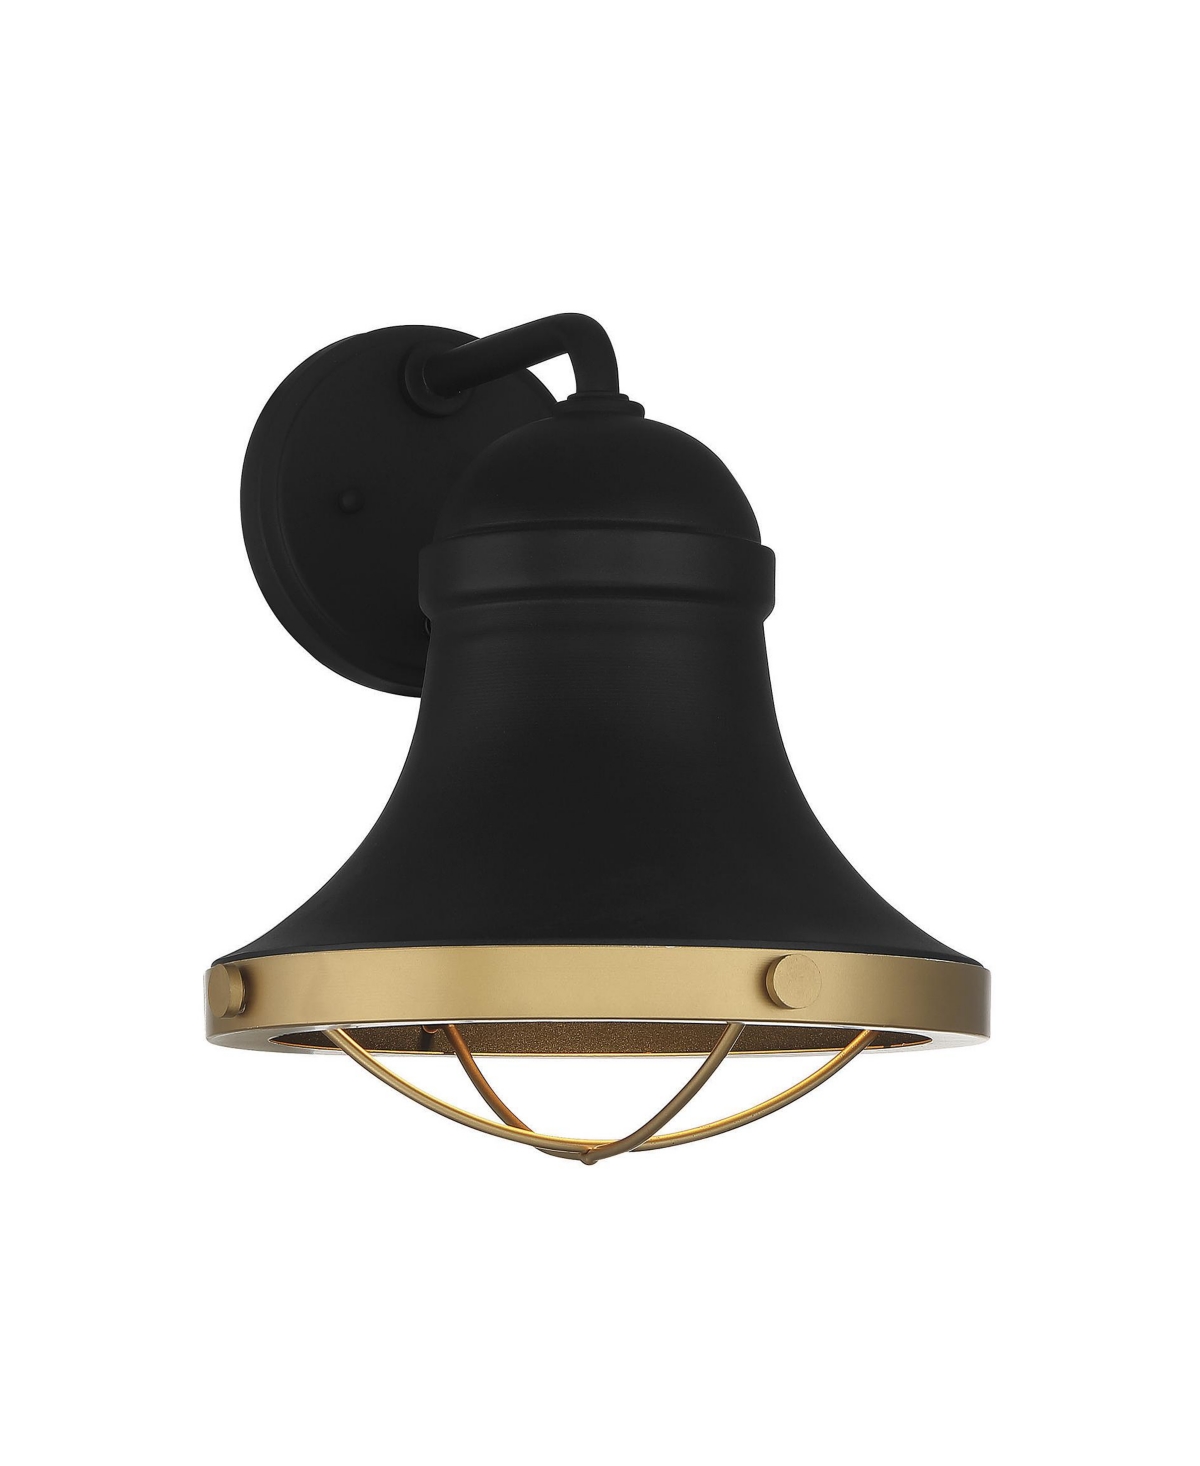 Belmont 1-Light Outdoor Wall Lantern in Textured Black with Warm Brass Accents - Textured black/warm brass accents